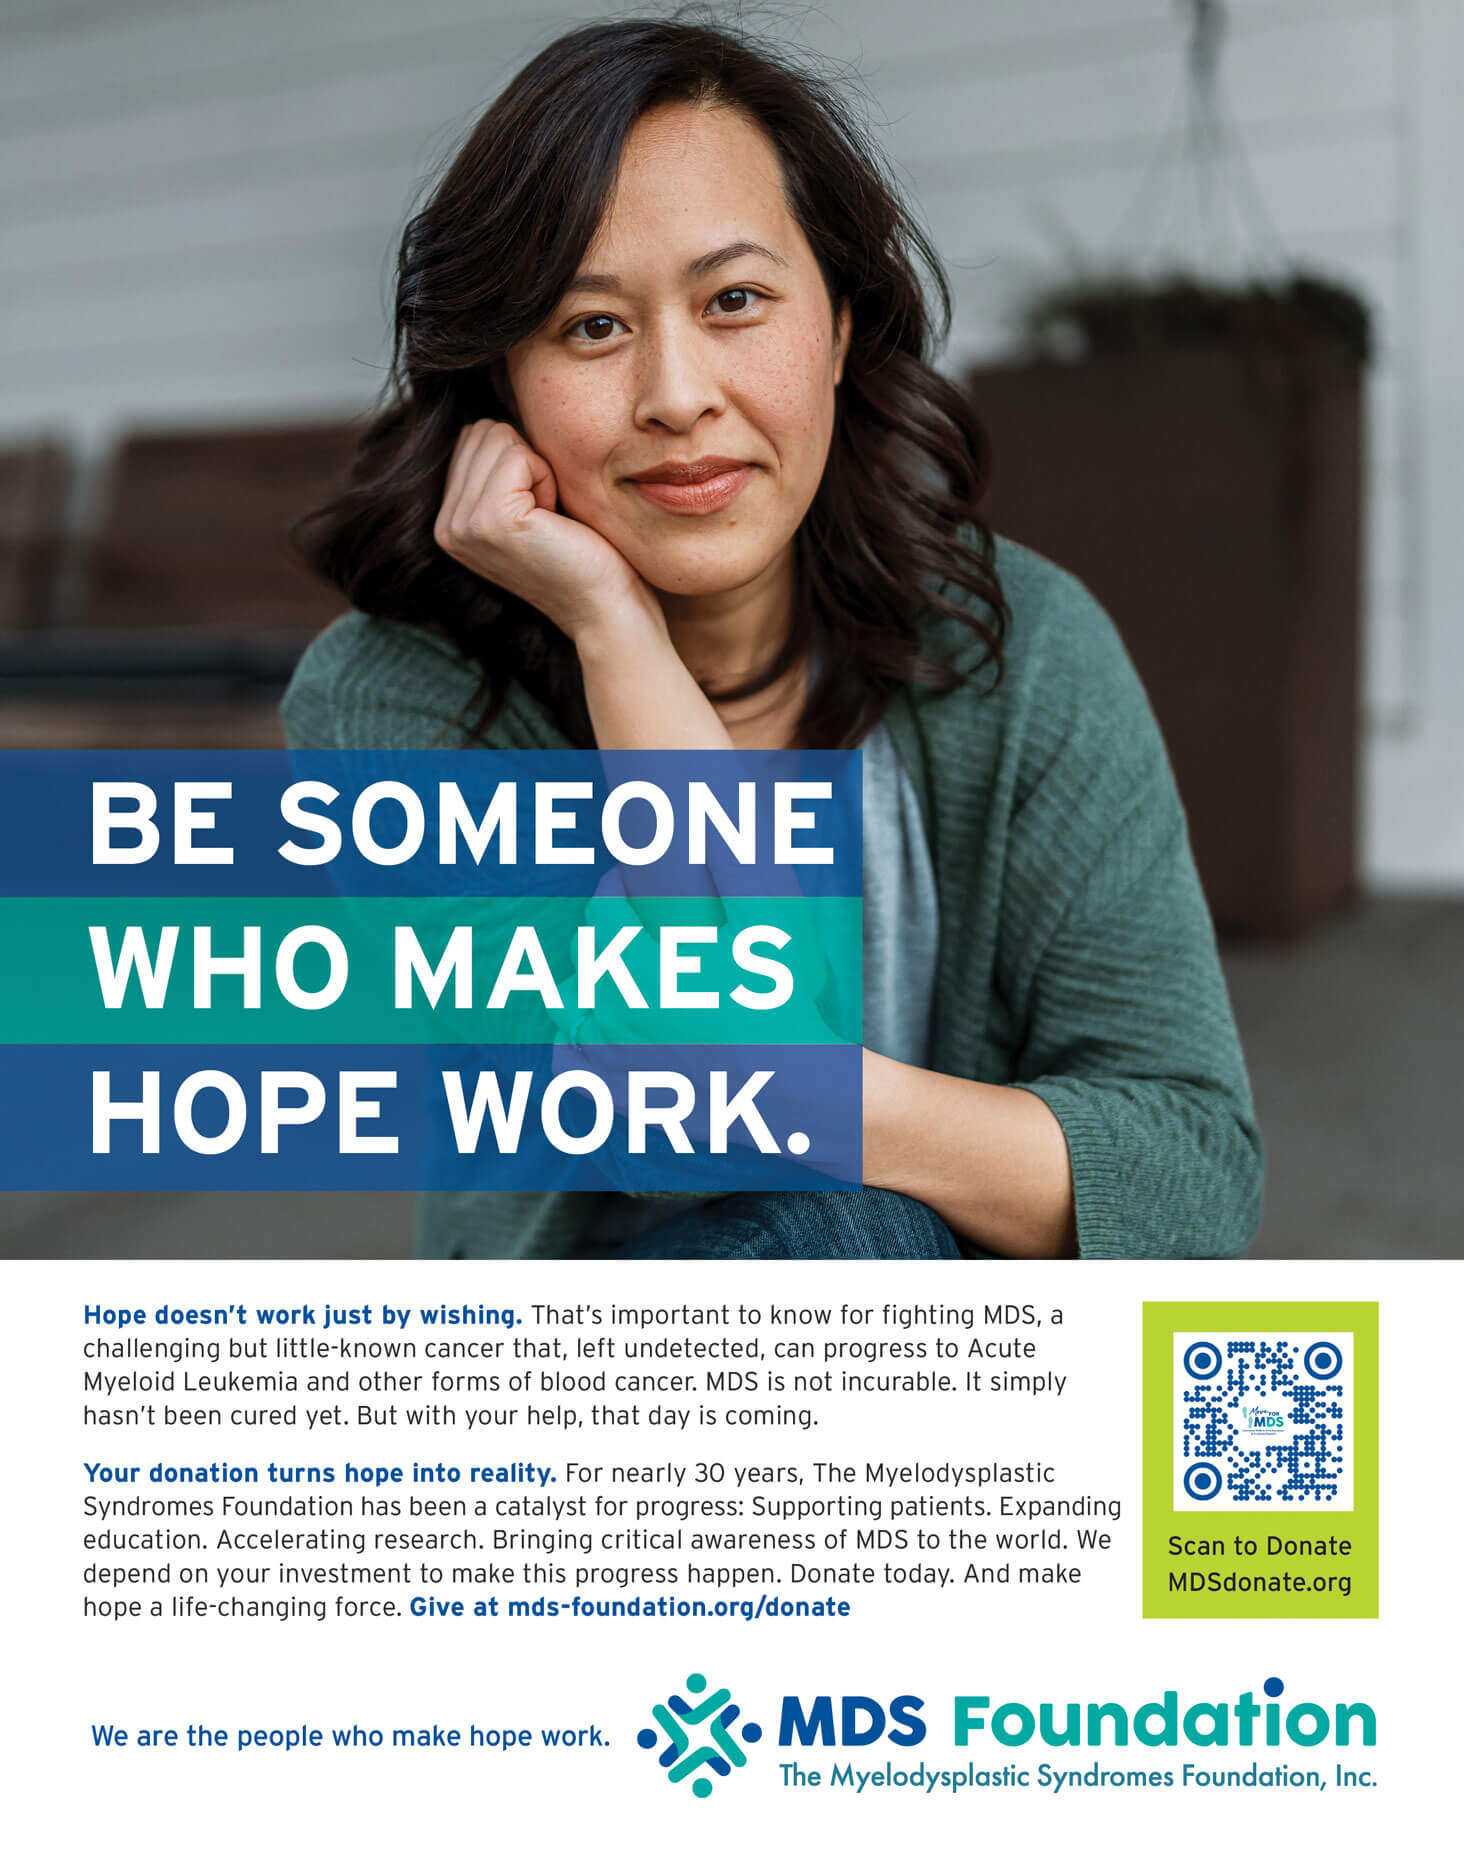 Myelodysplastic Syndromes Foundation_Be someone who makes hope work_Print